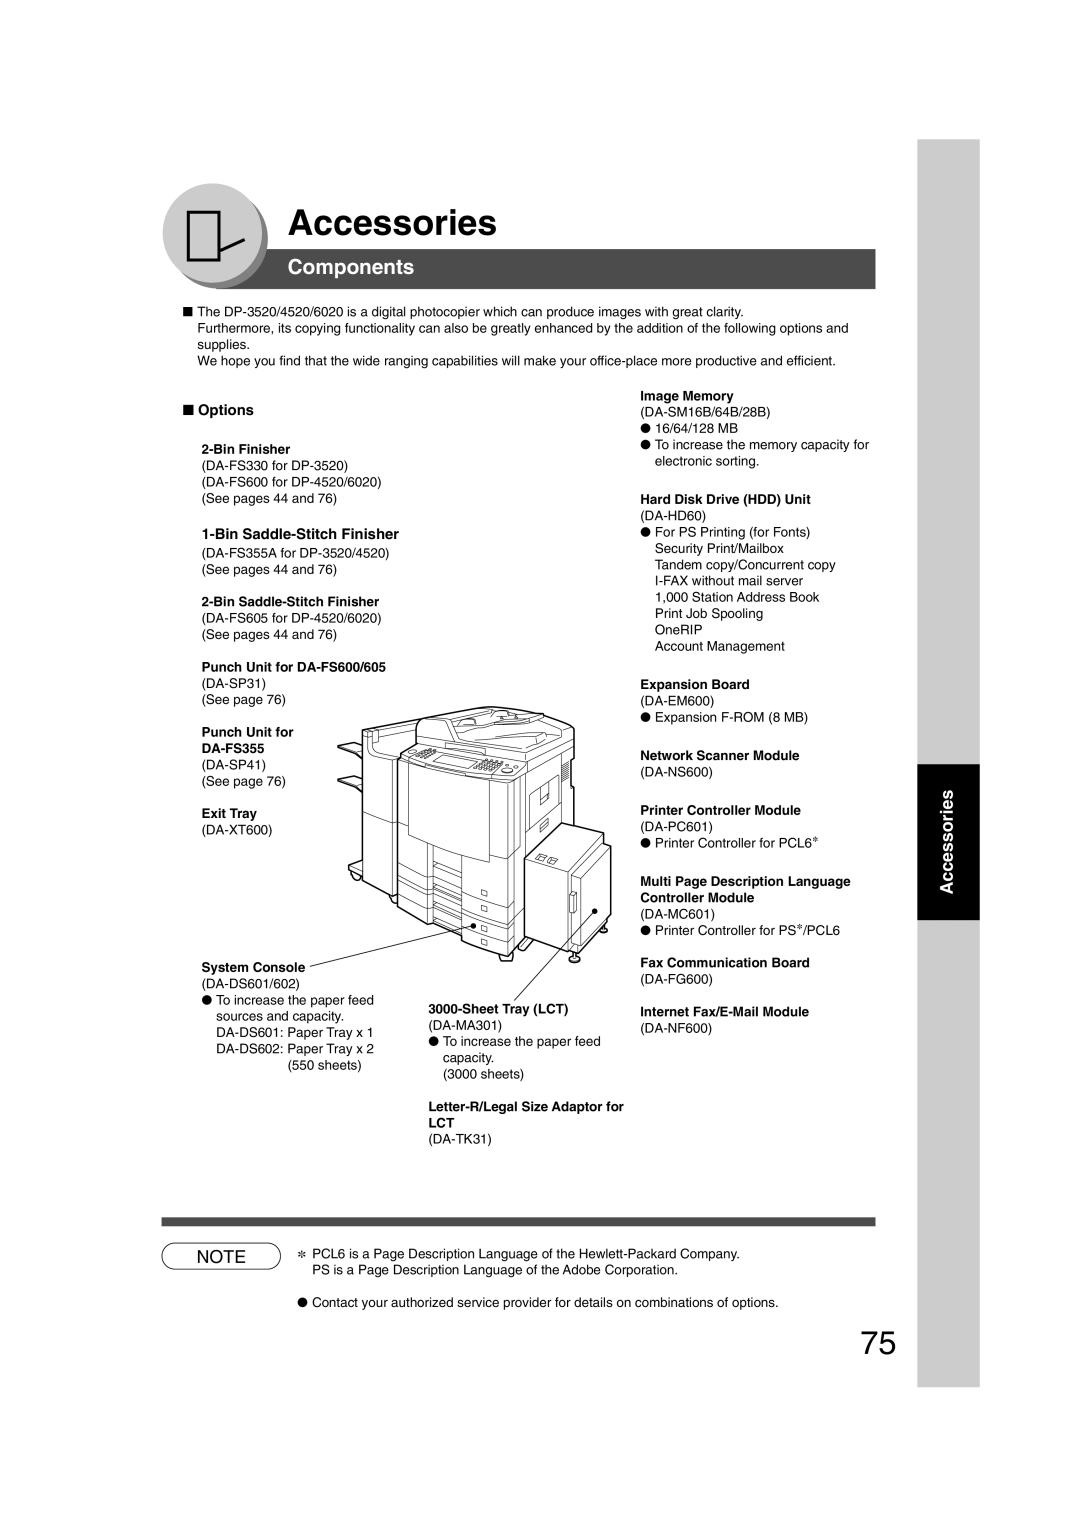 Panasonic 6020, 4520 manual Accessories, Components, Options, Bin Saddle-Stitch Finisher 